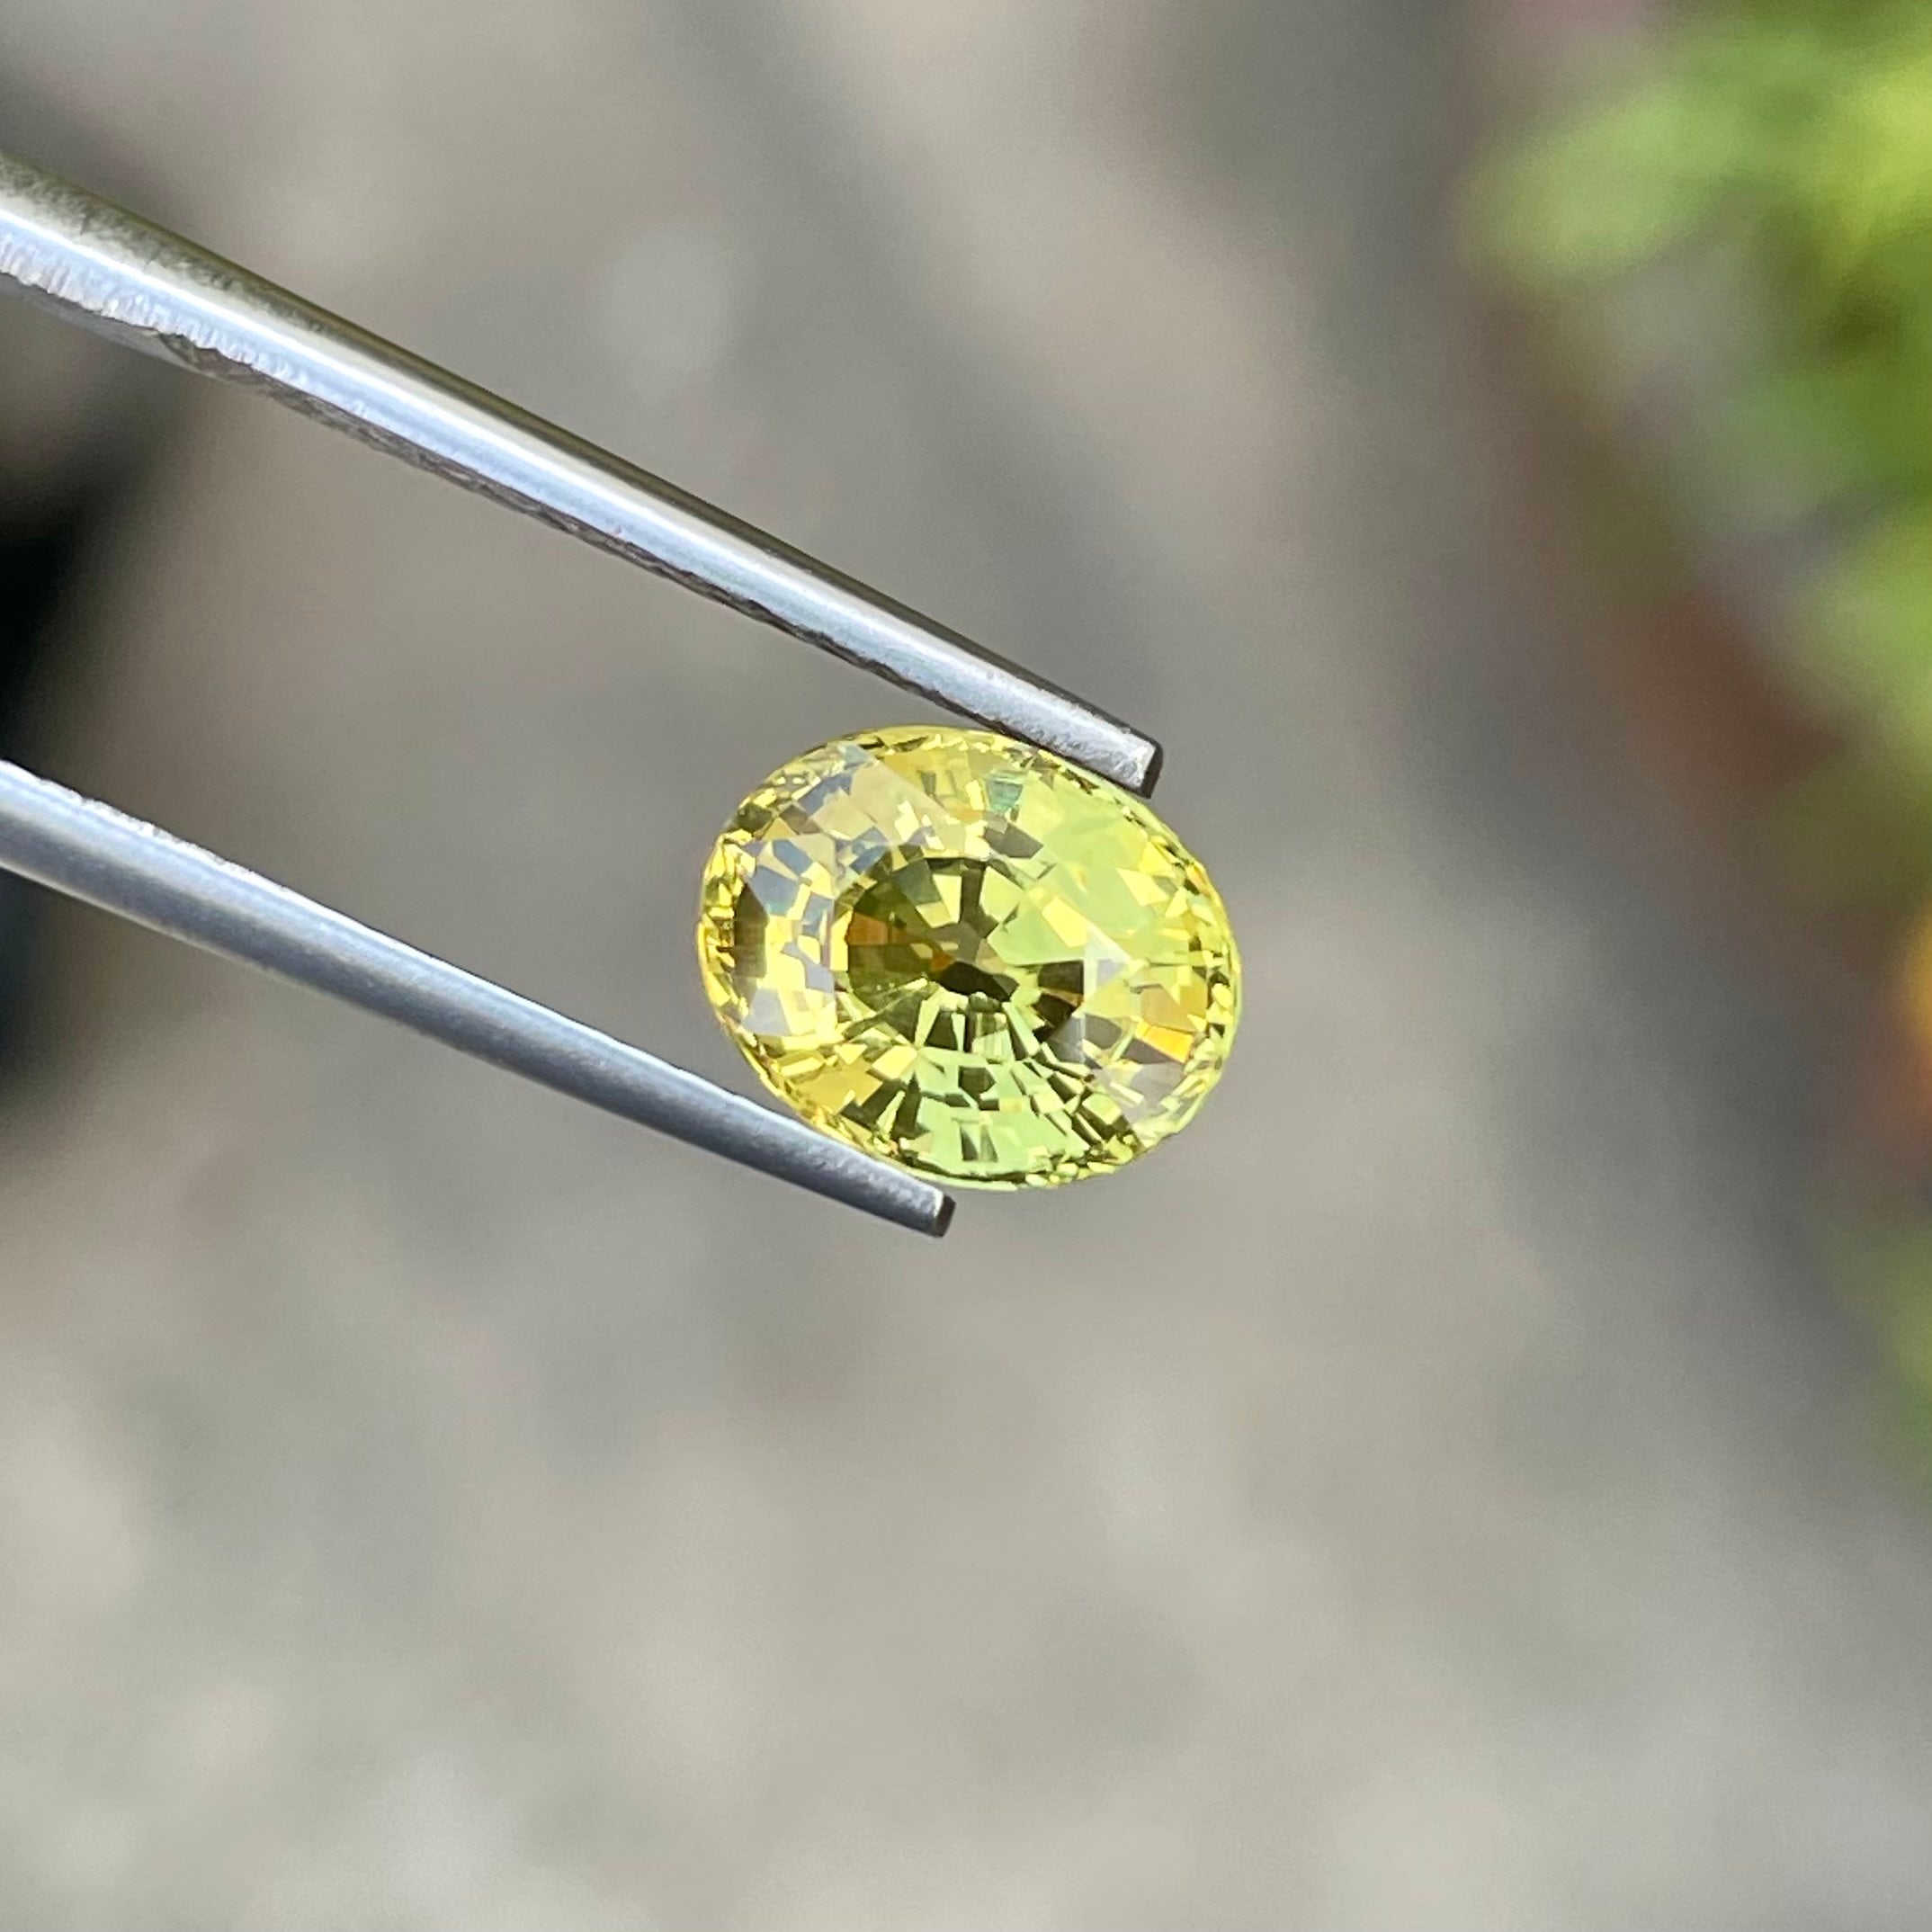 Flawless Yellow Chrysoberyl 2.40 carats Fancy Cut Natural Gemstone from Sri Lanka